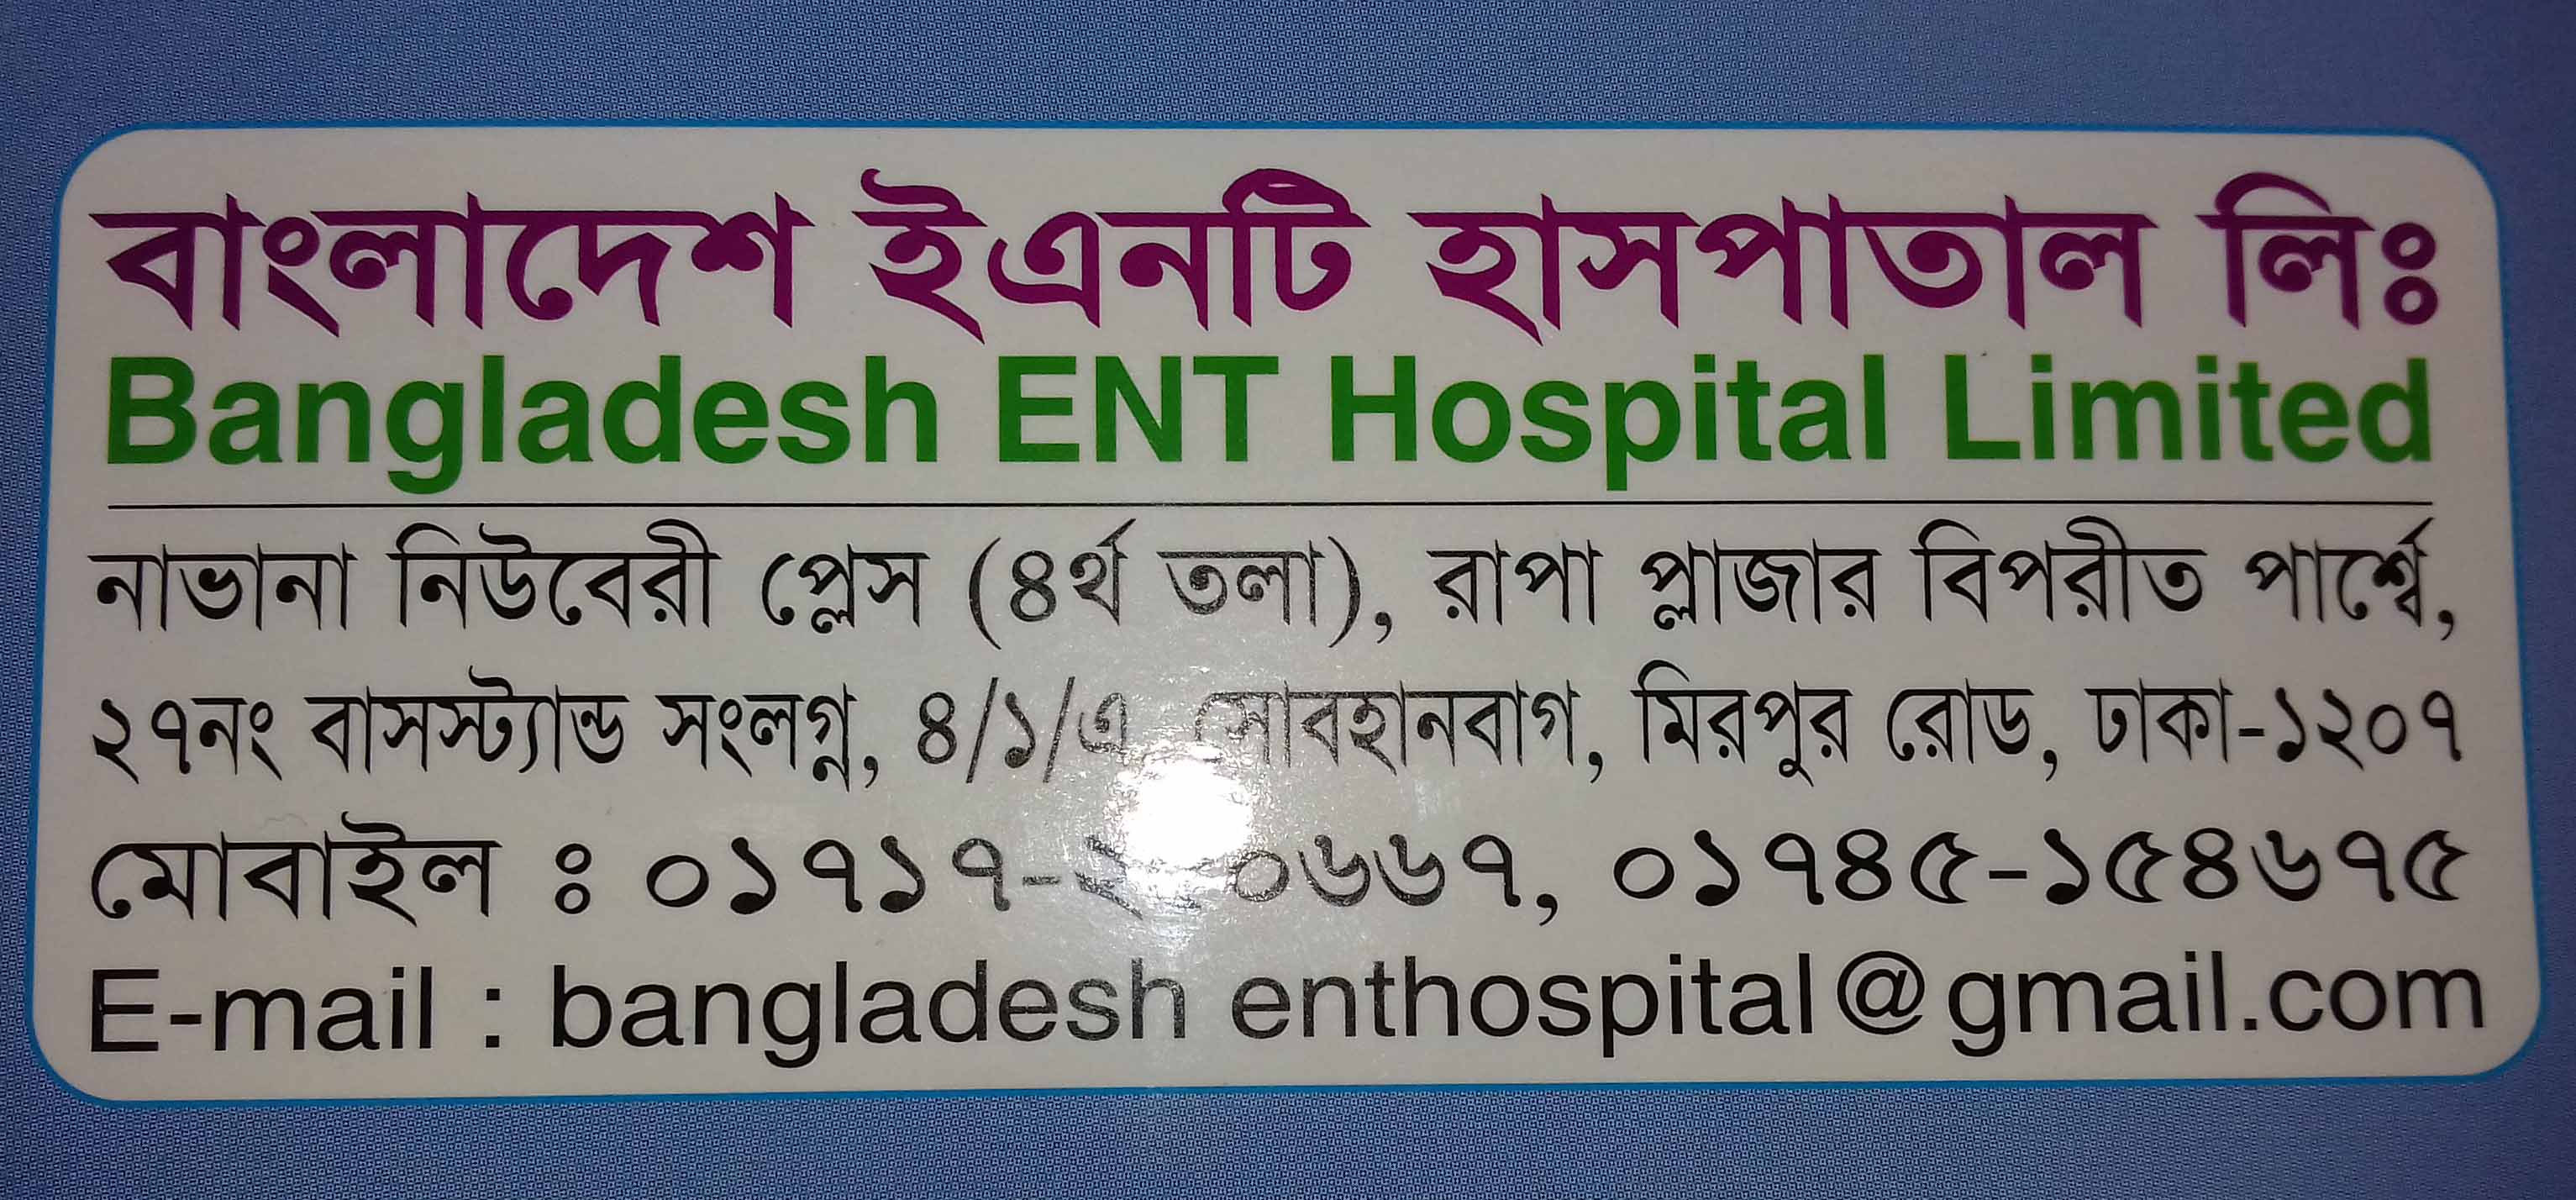 Bangladesh ENT hospital Ltd